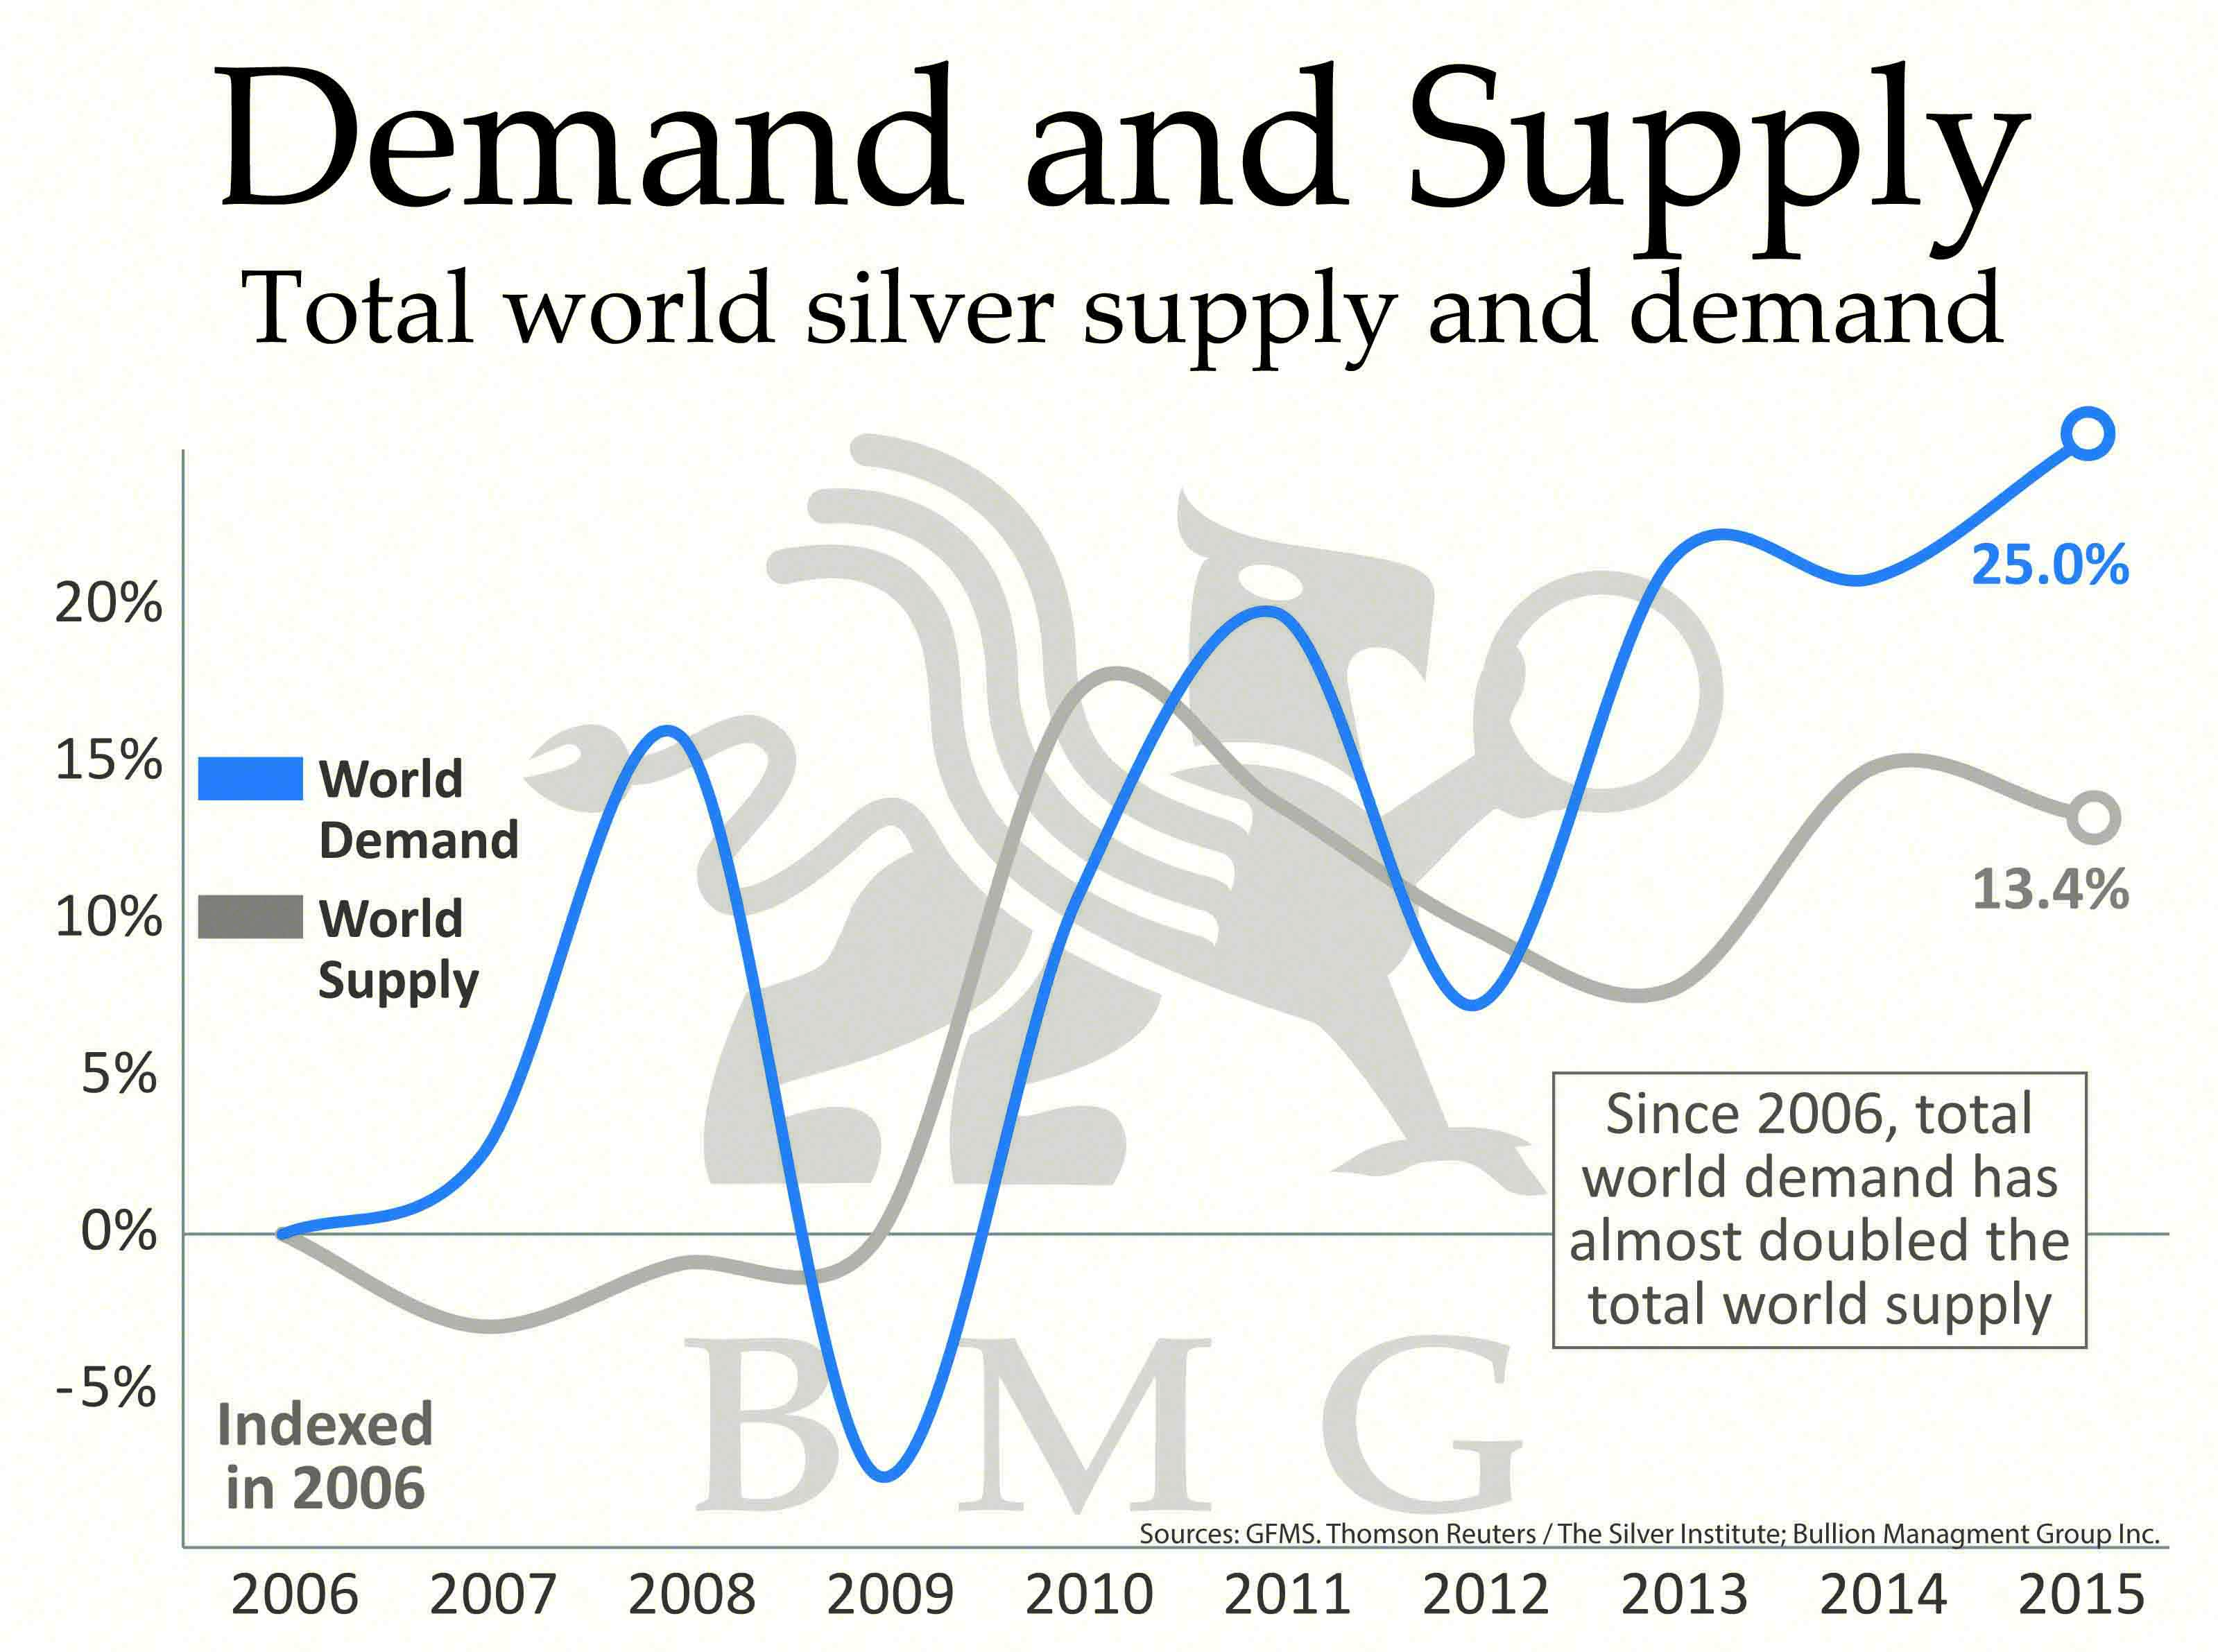 Supply Demand Chart